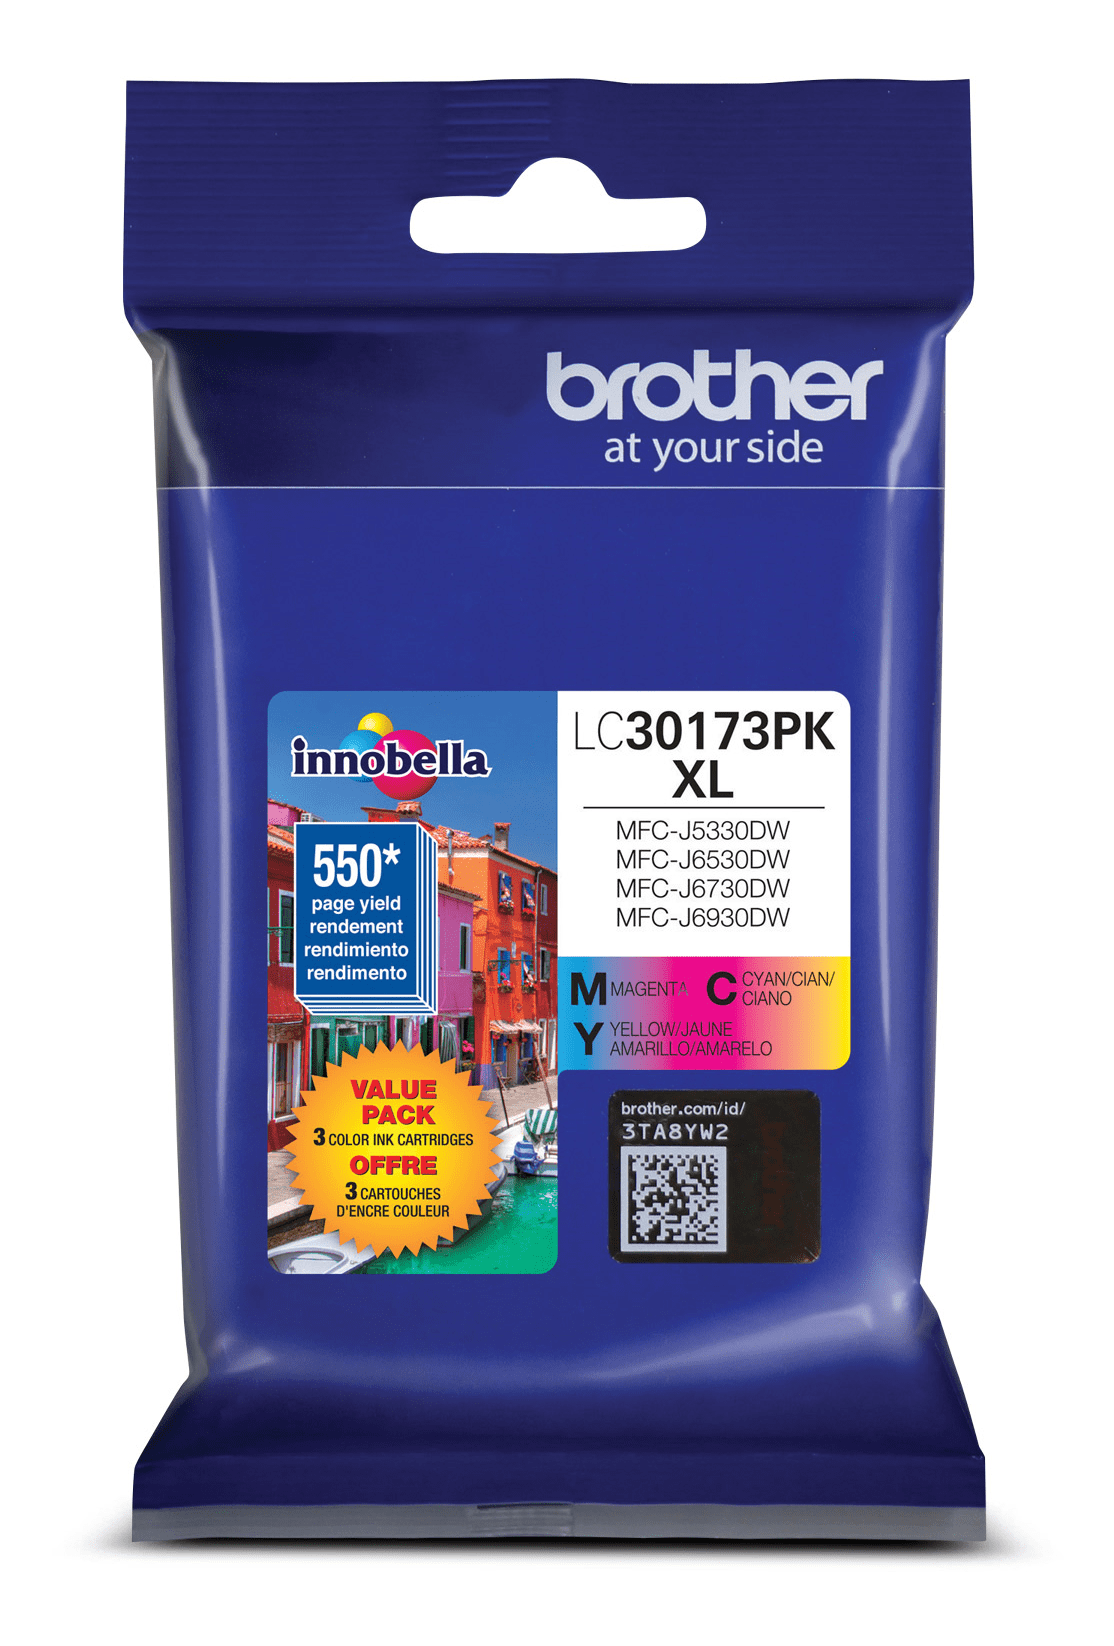 Brother LC30173PKS Innobella  Ink Cartridges   1 Cyan, 1 Magenta, 1 Yellow, High Yield